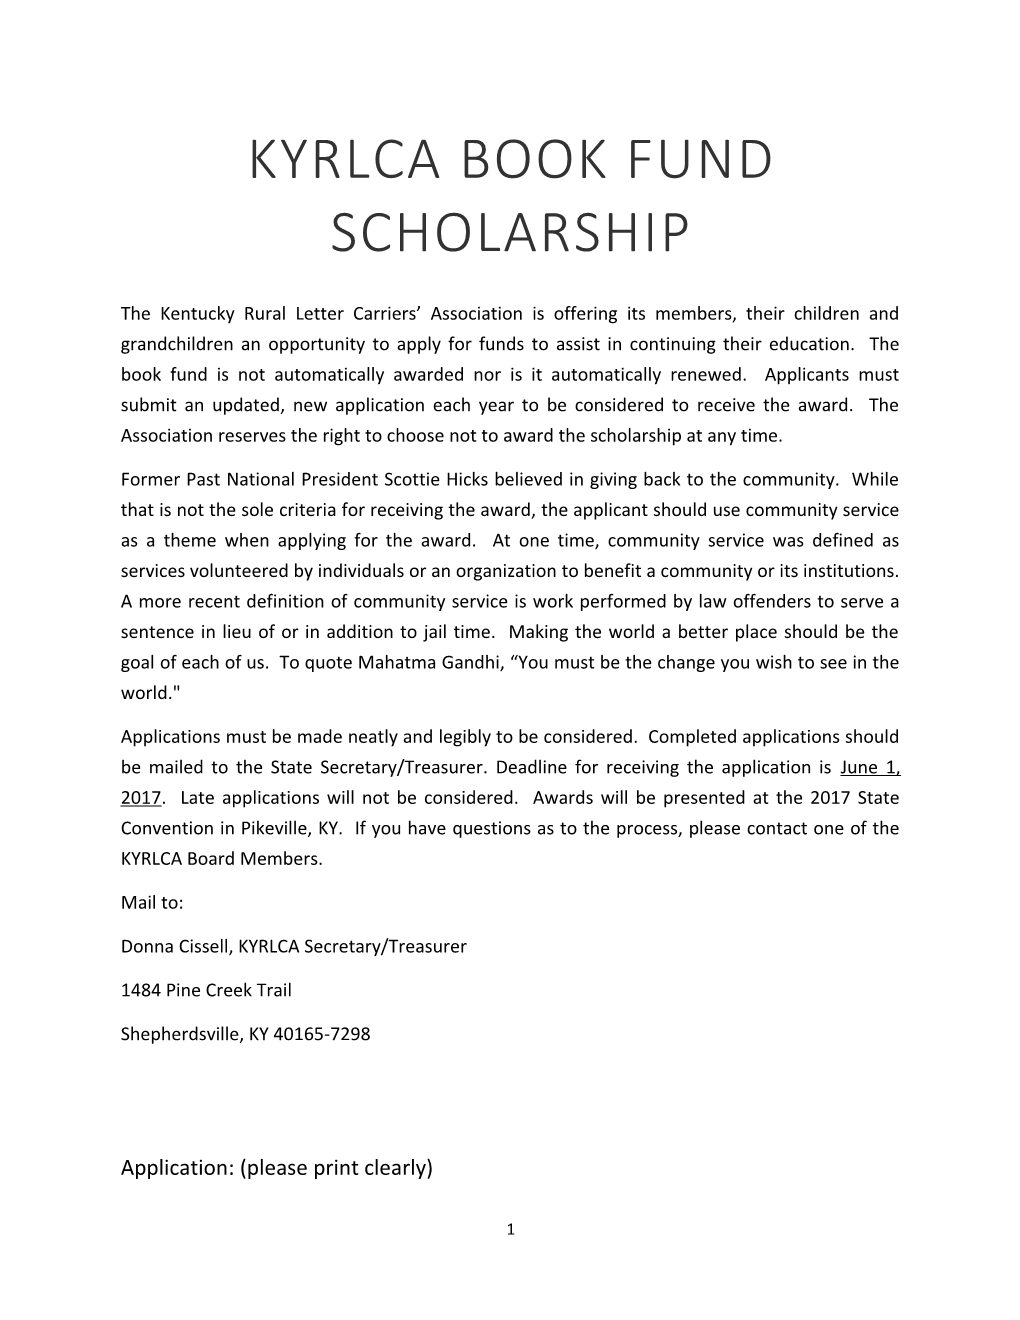 KYRLCA Book Fund Scholarship